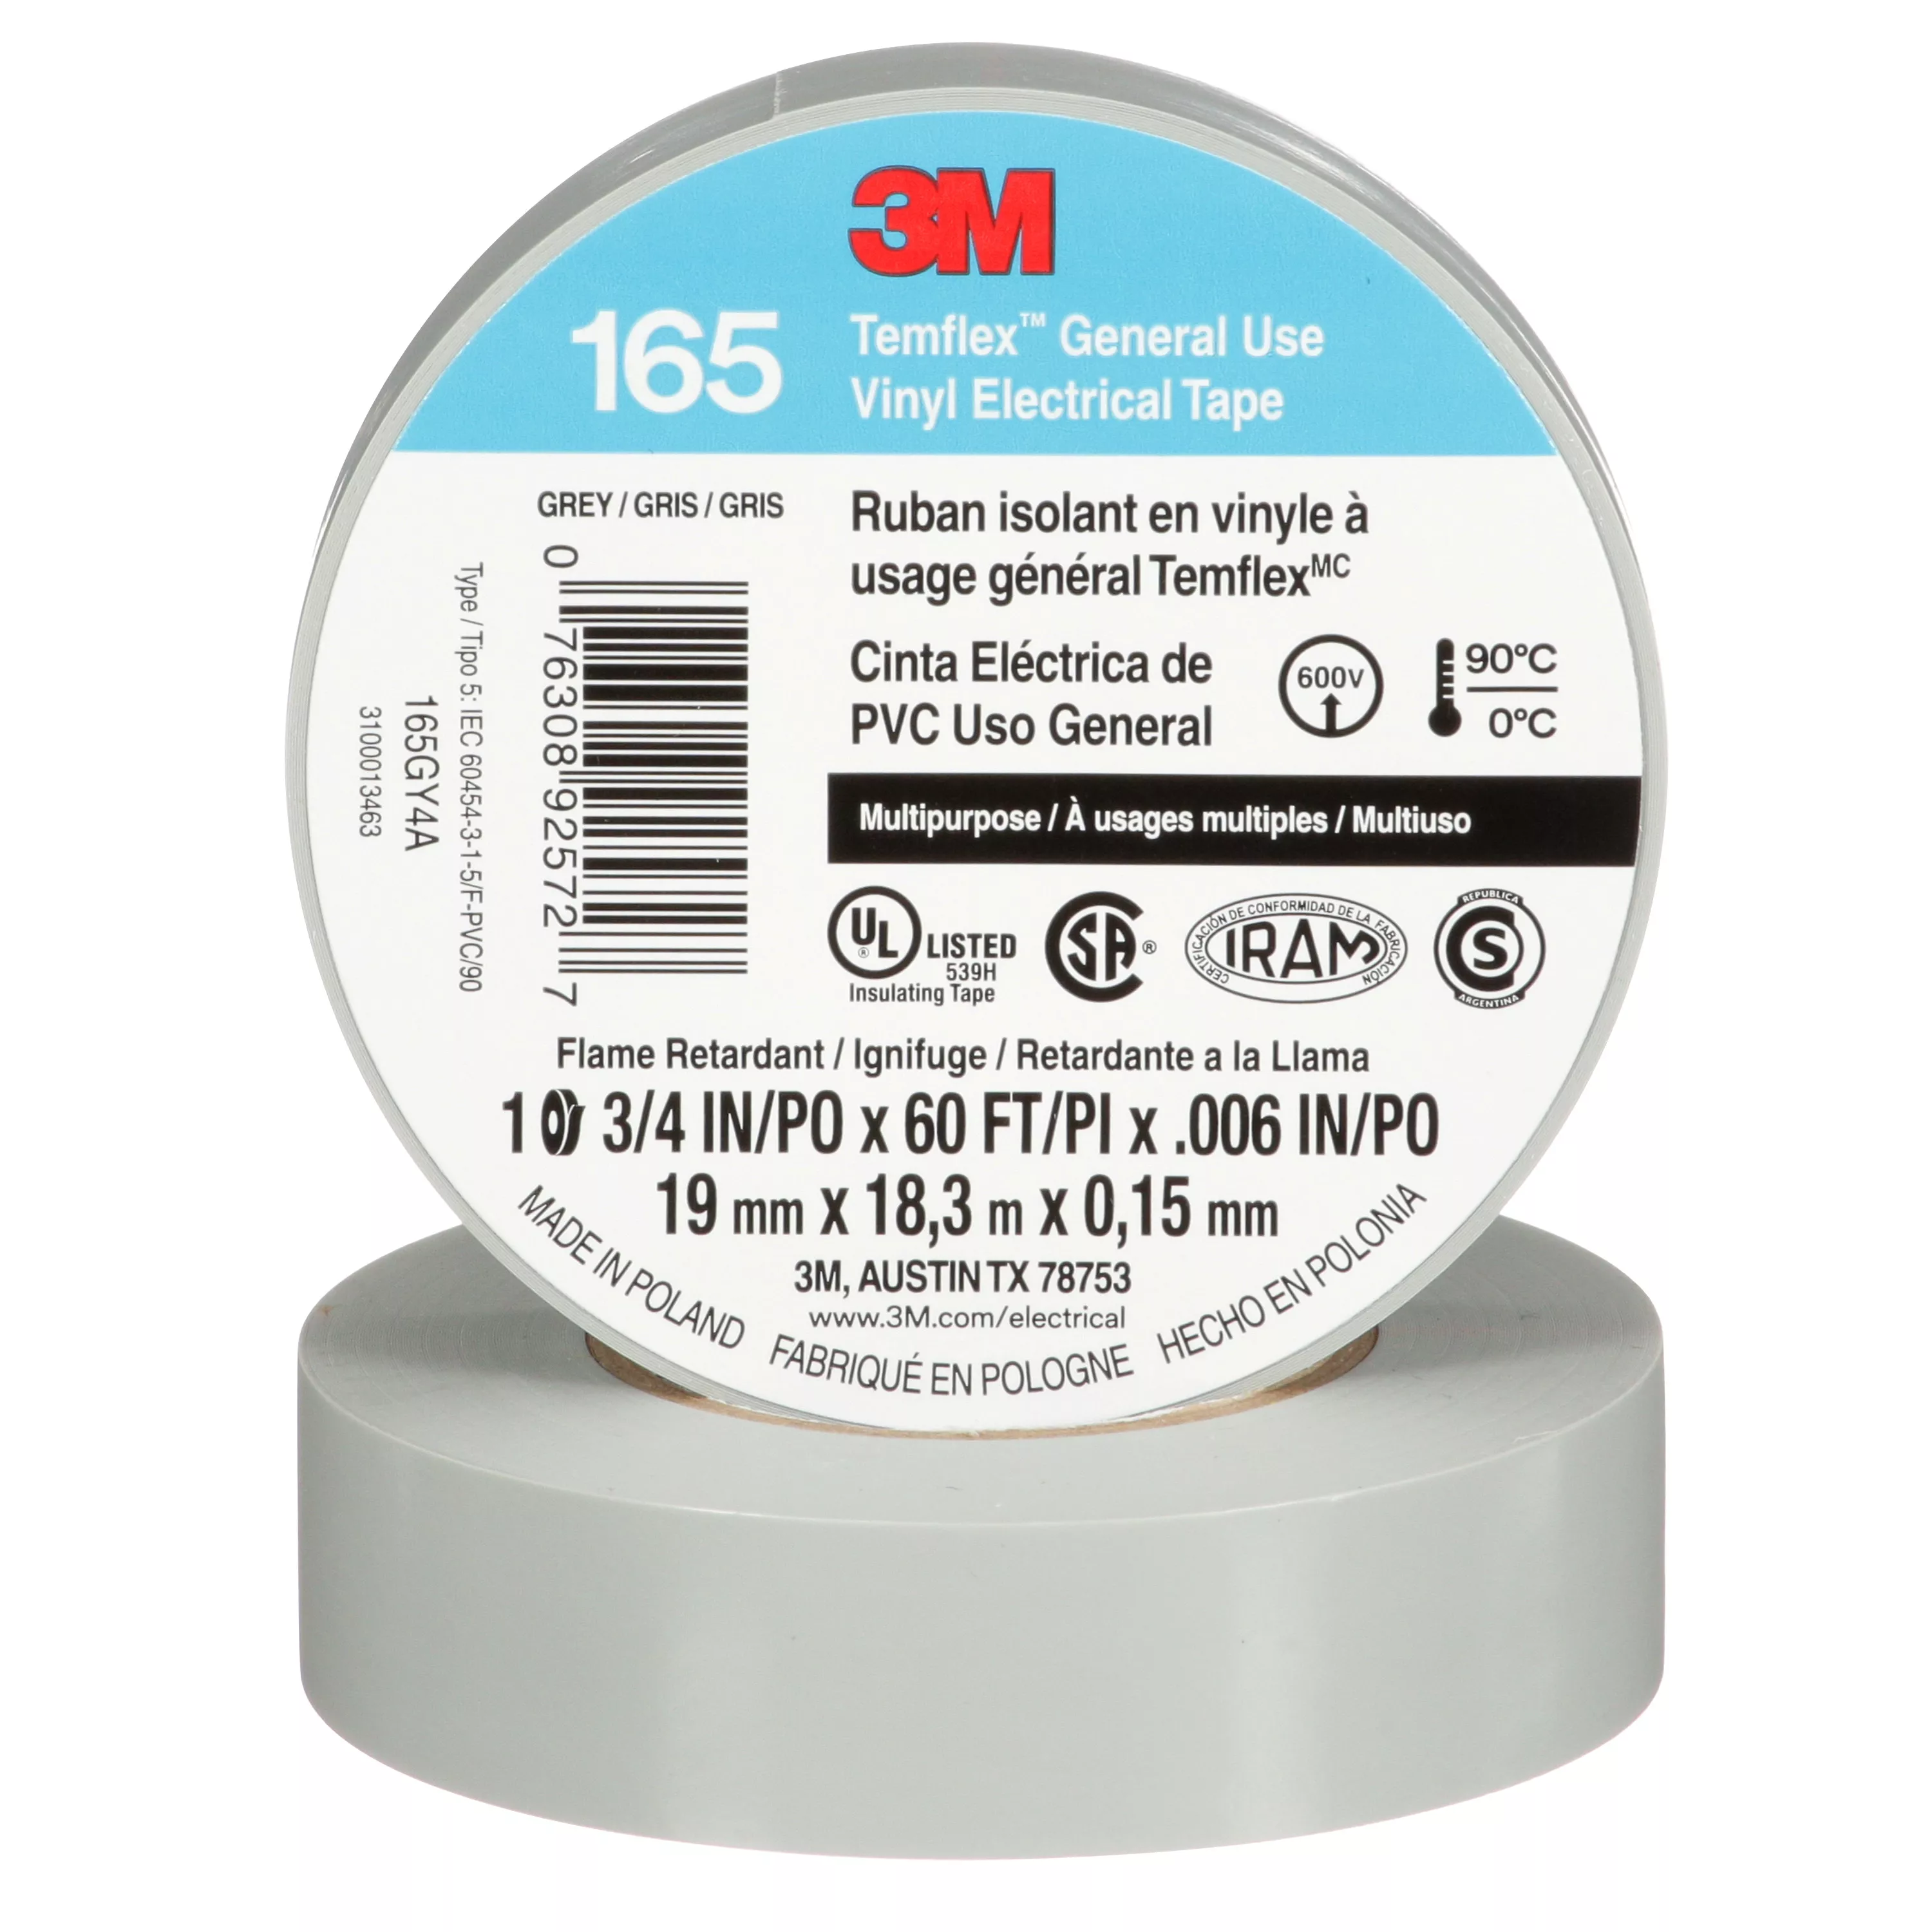 SKU 7100169192 | 3M™ Temflex™ Vinyl Electrical Tape 165